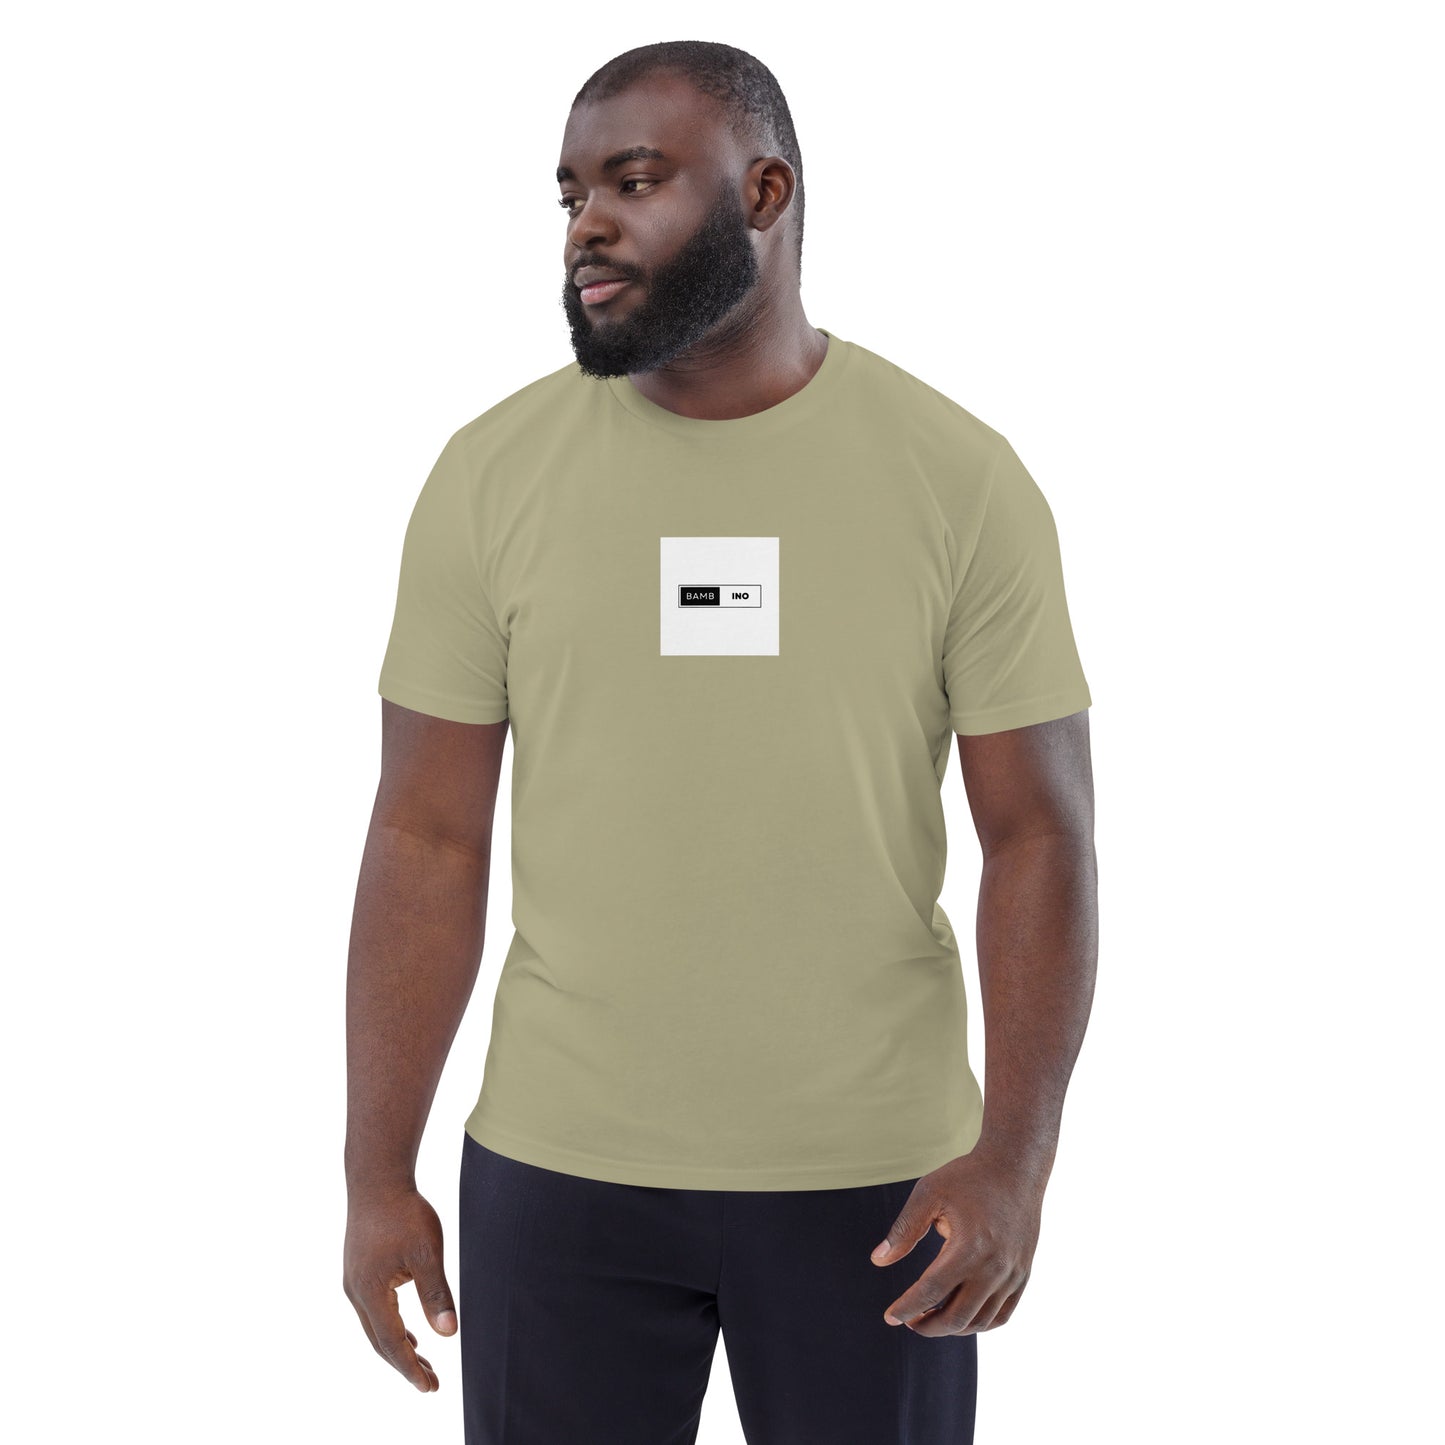 Unisex organic cotton t-shirt - baby magazin